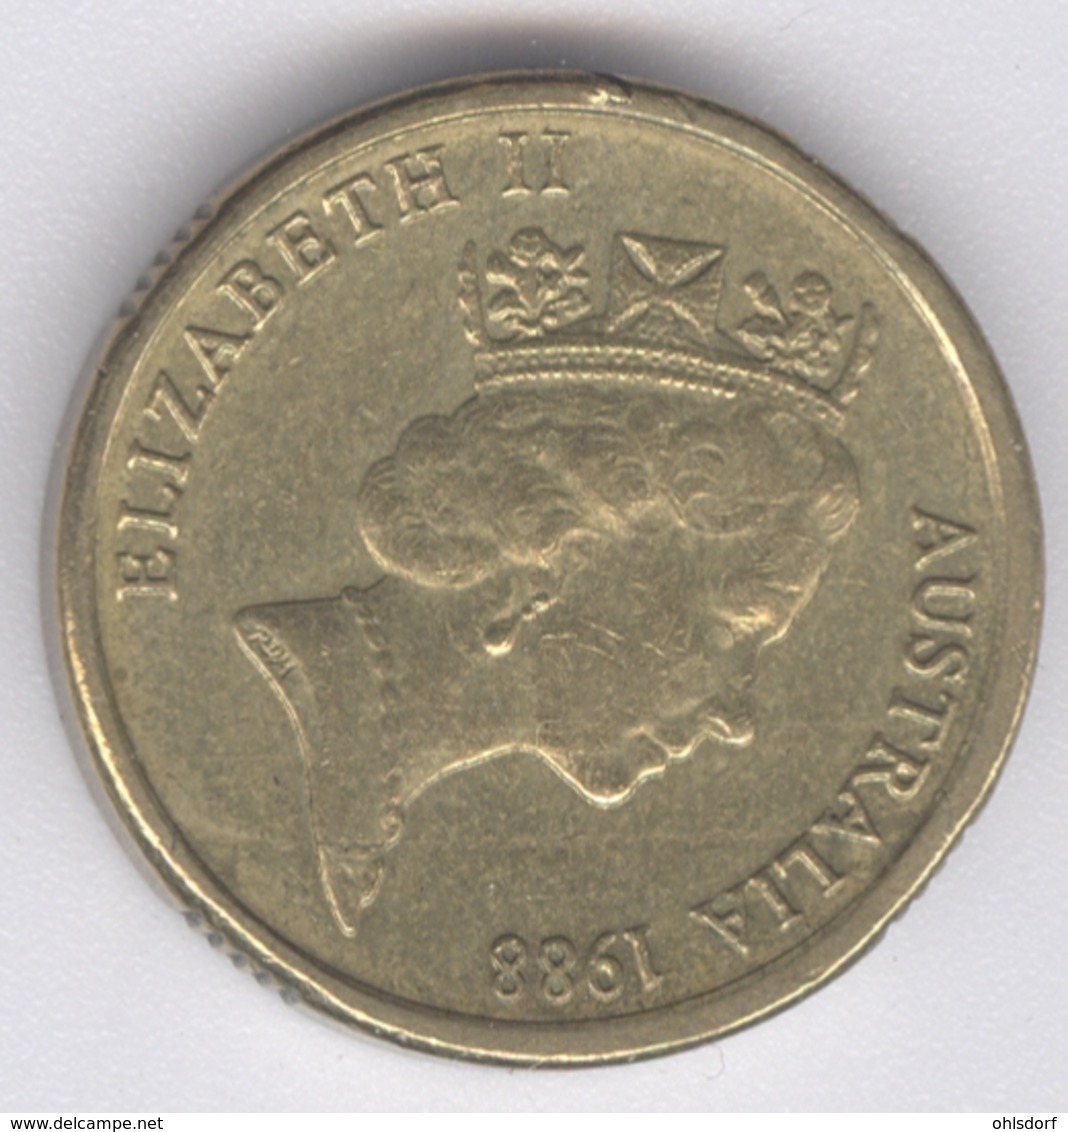 AUSTRALIA 1988: 2 Dollars, KM 101 - 2 Dollars